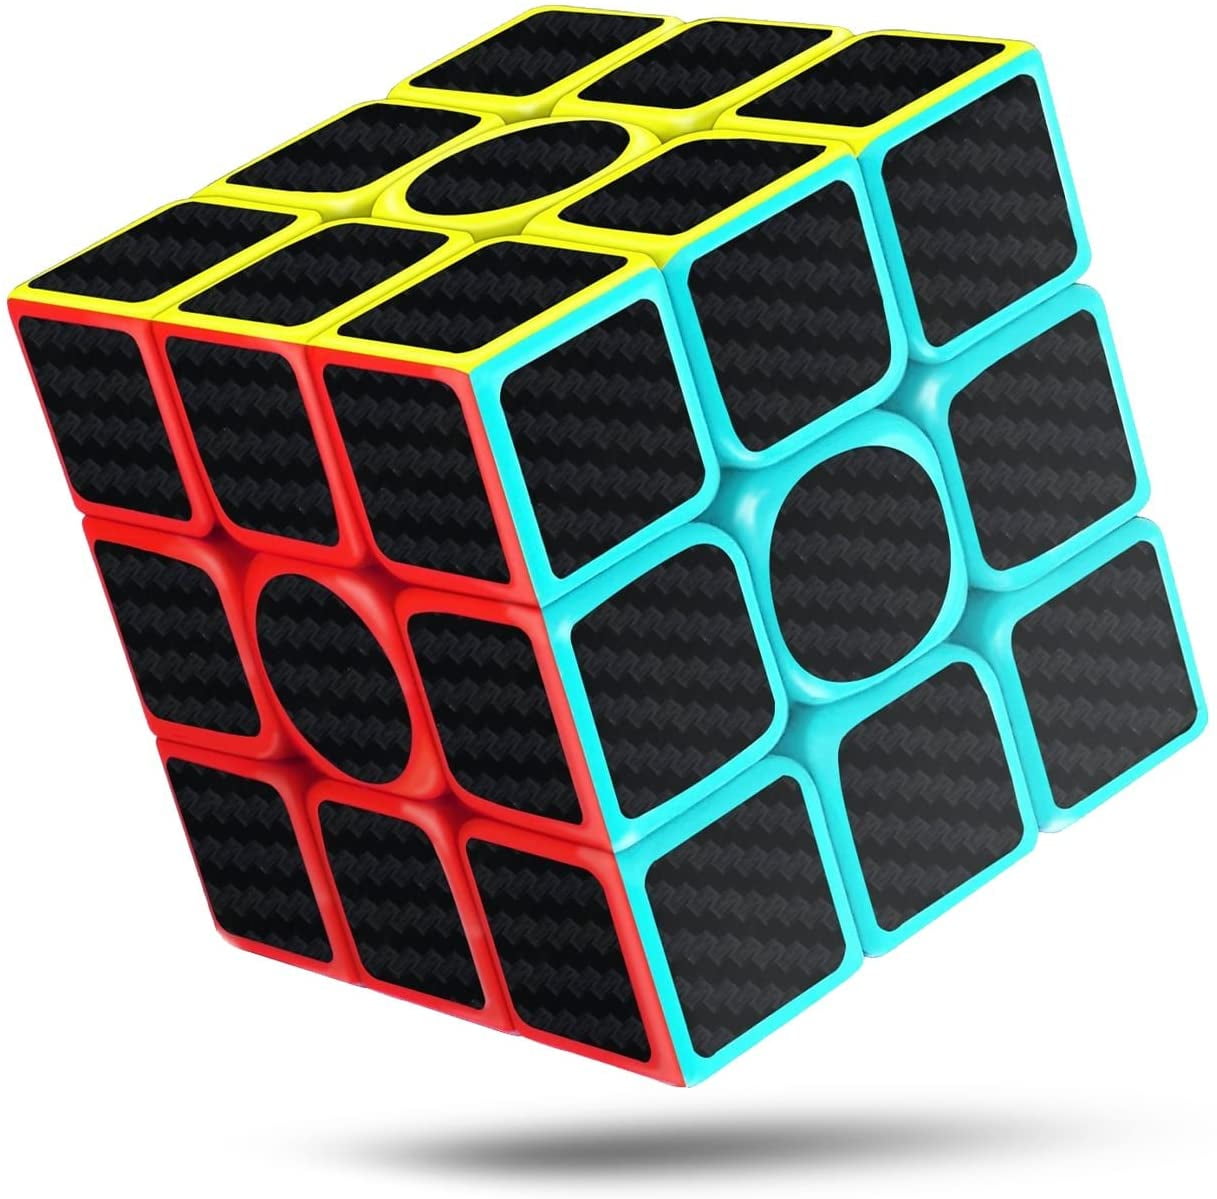 Rubik's Cube 3x3 Speed Magic Fast turn Rubix 5.6cm Original Cube Instruction 